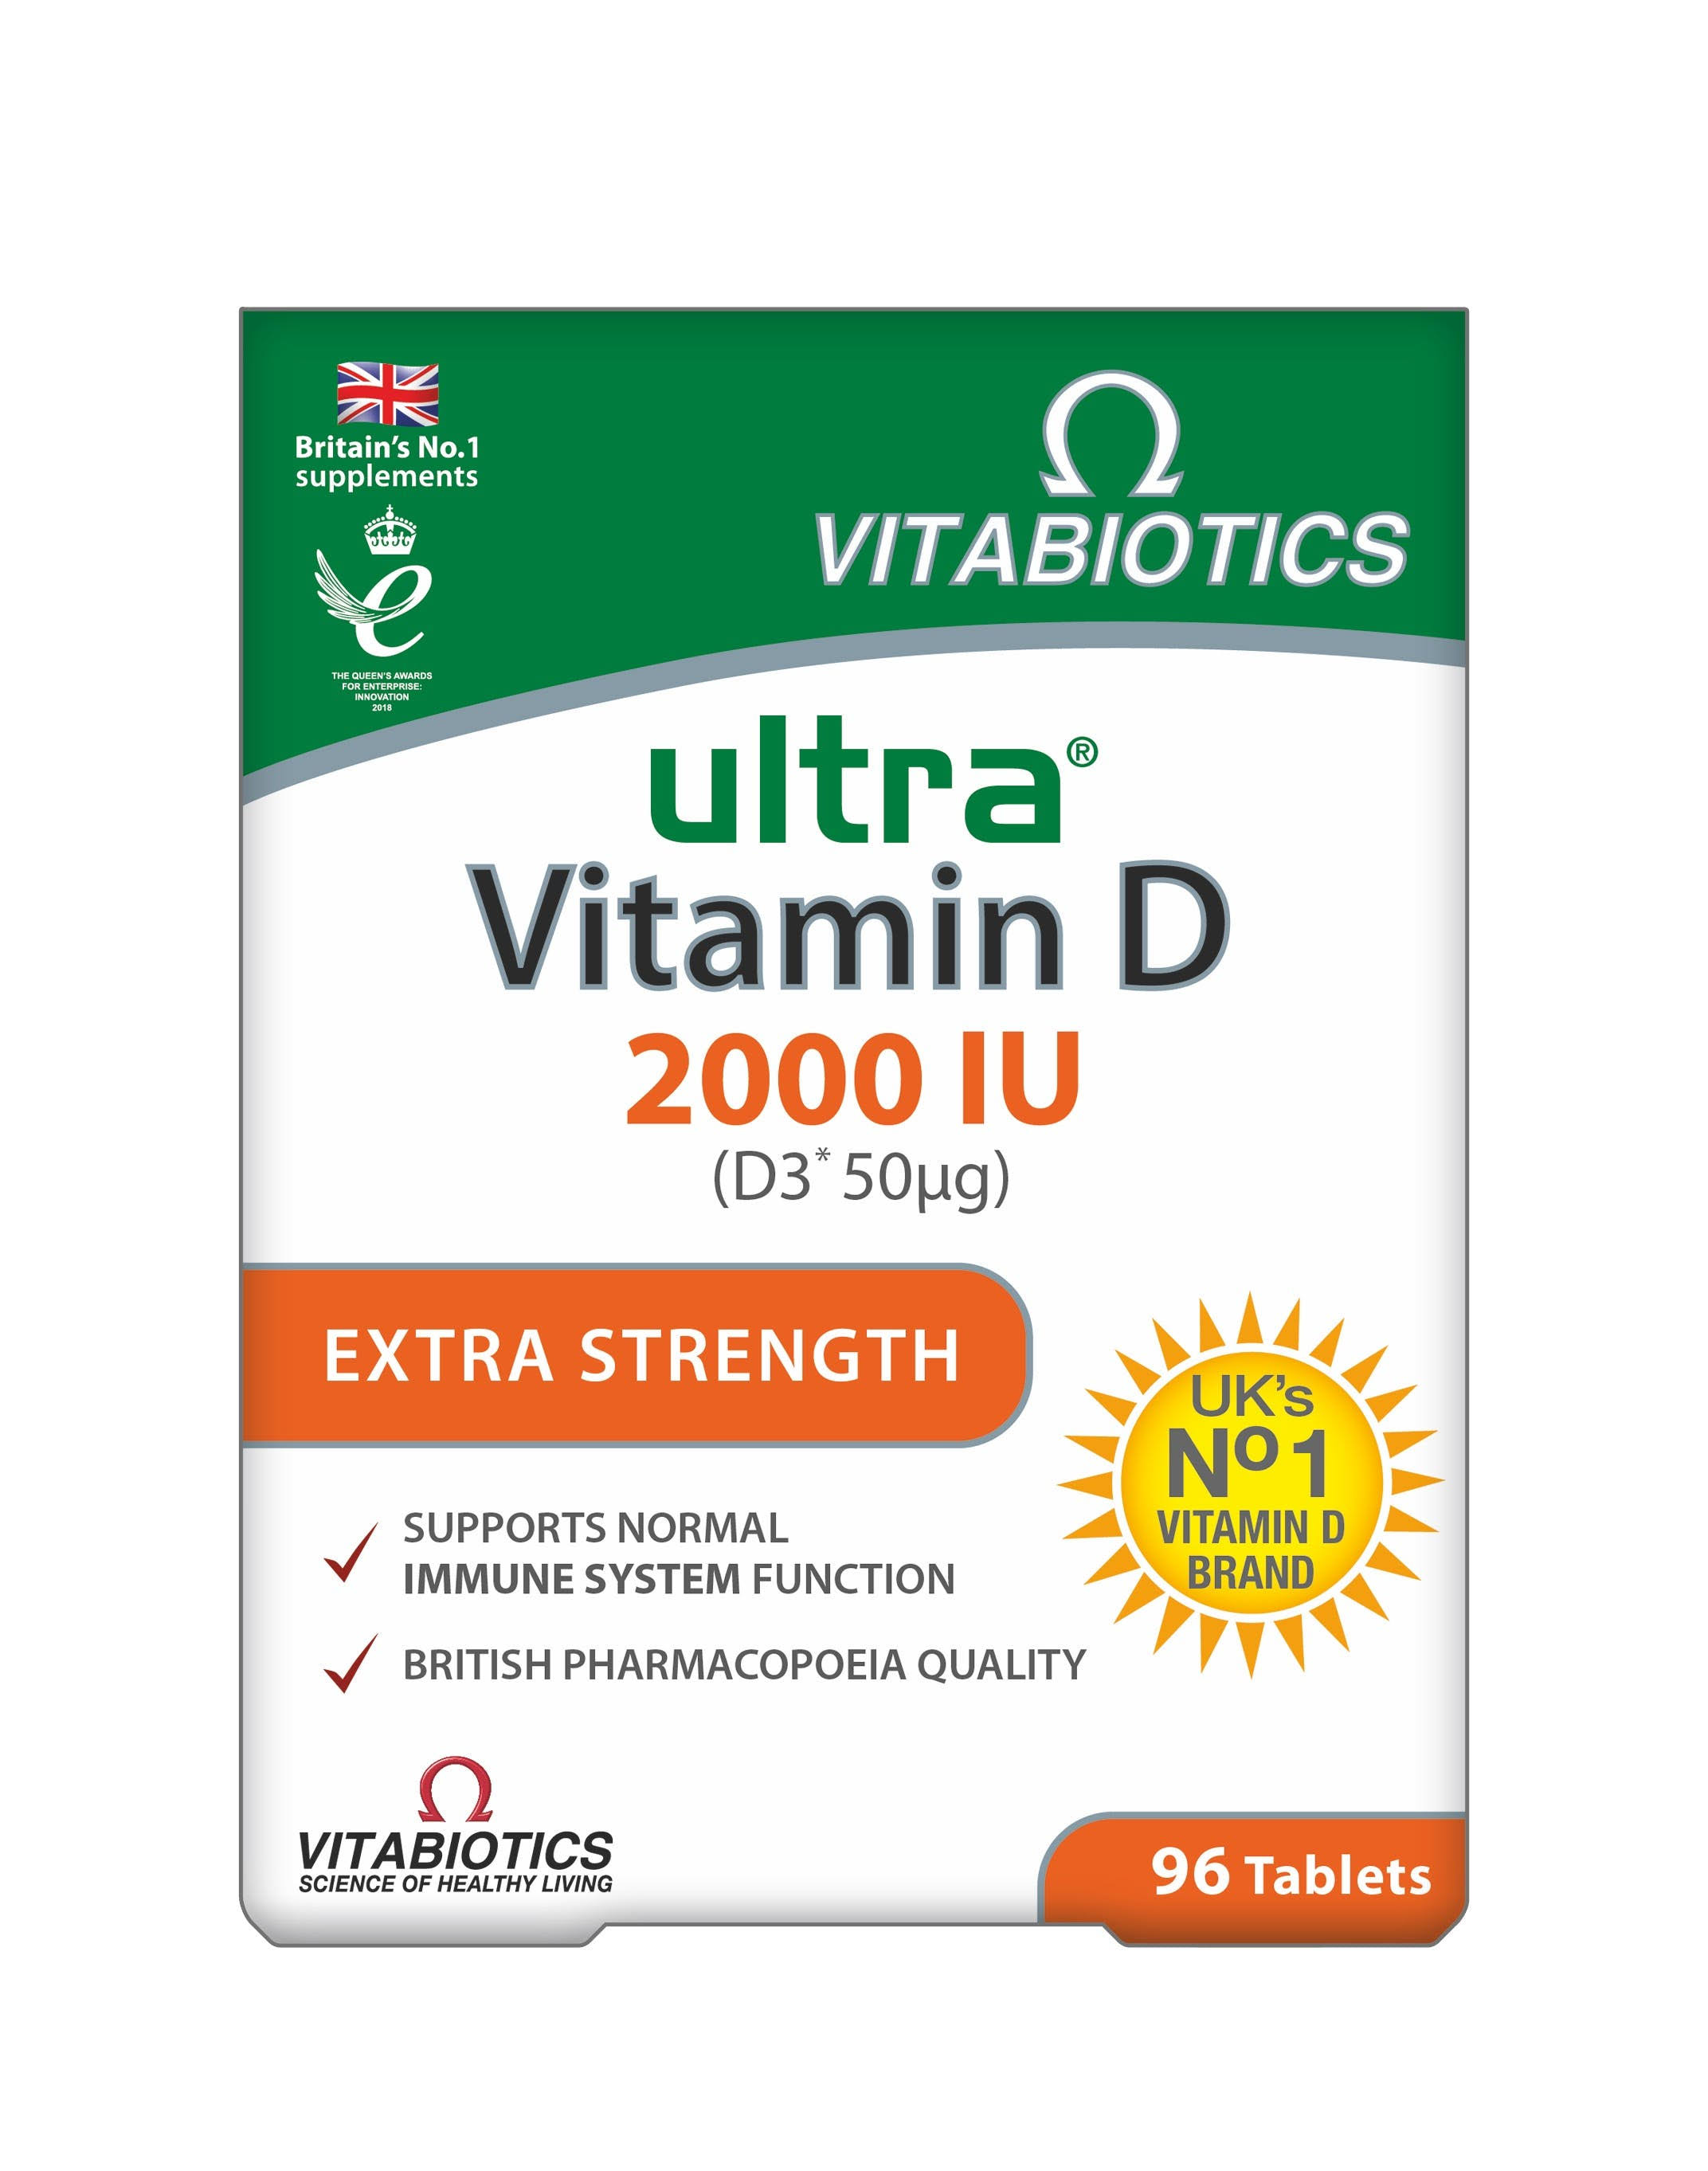 Vitabiotics Ultra Vitamin D 2000 IU Extra Strength Supplement - 96ct